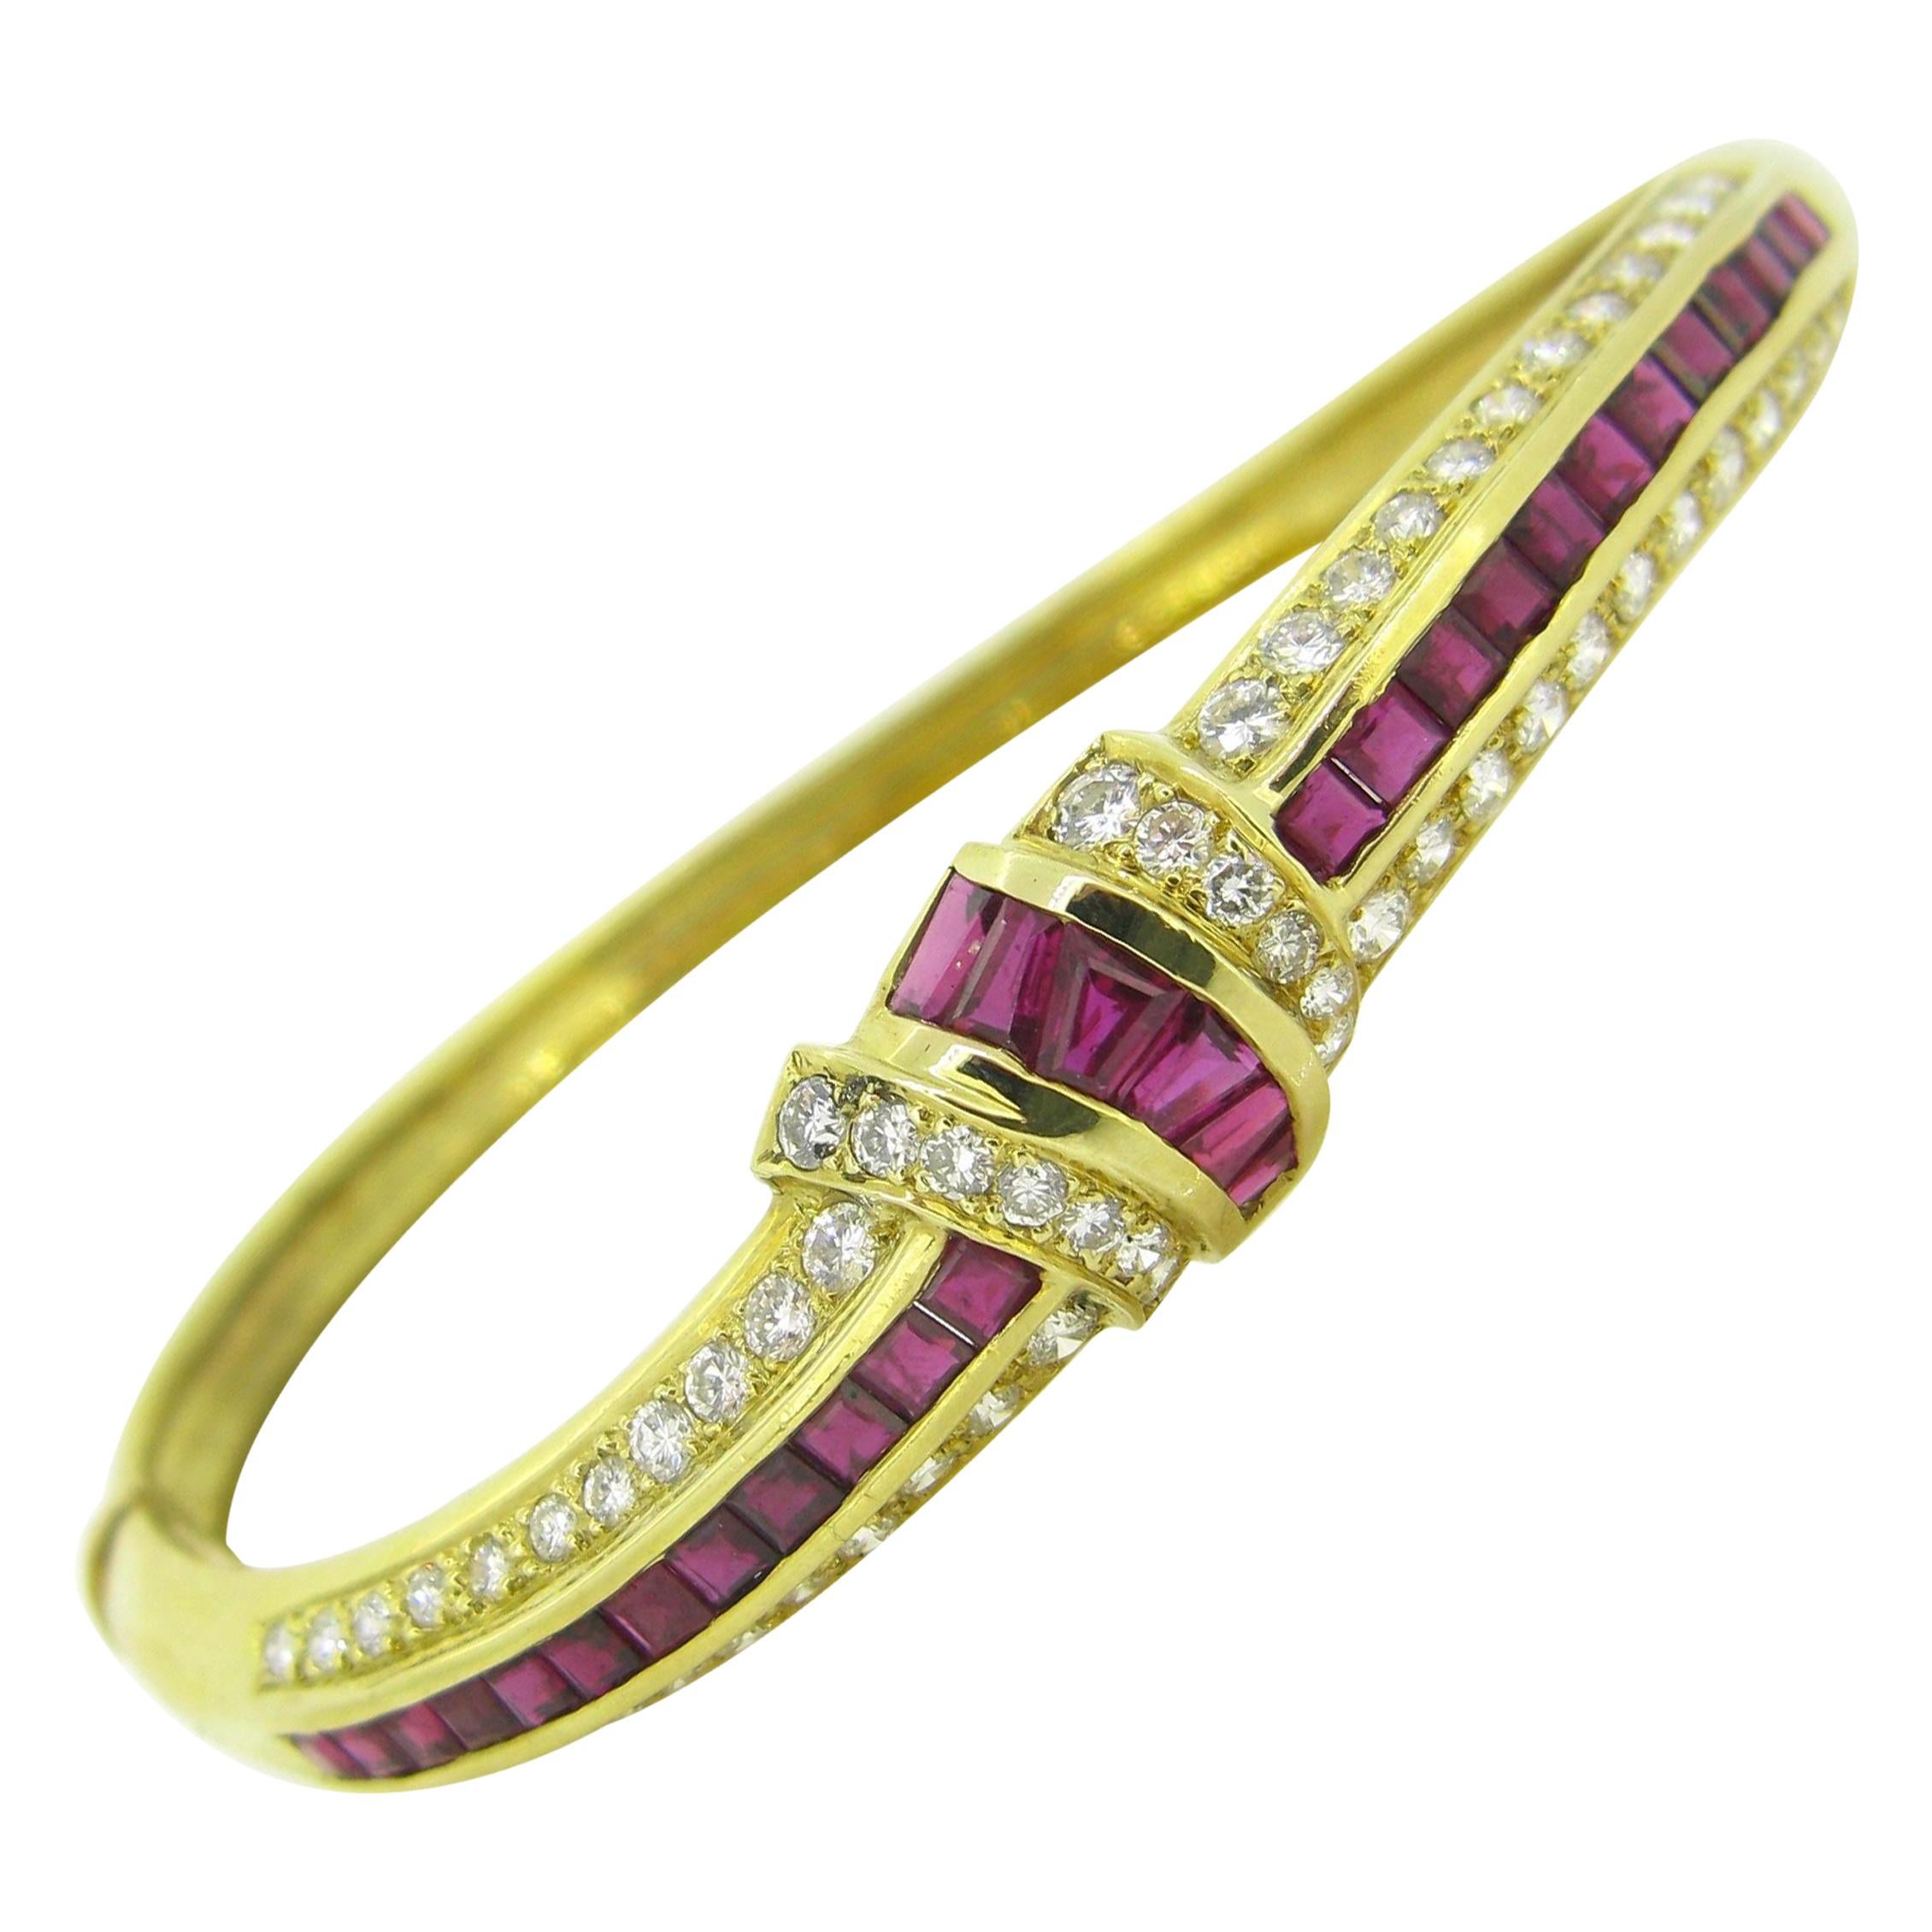 Calibrated Rubies and Diamonds Bangle Bracelet, 18kt Yellow Gold